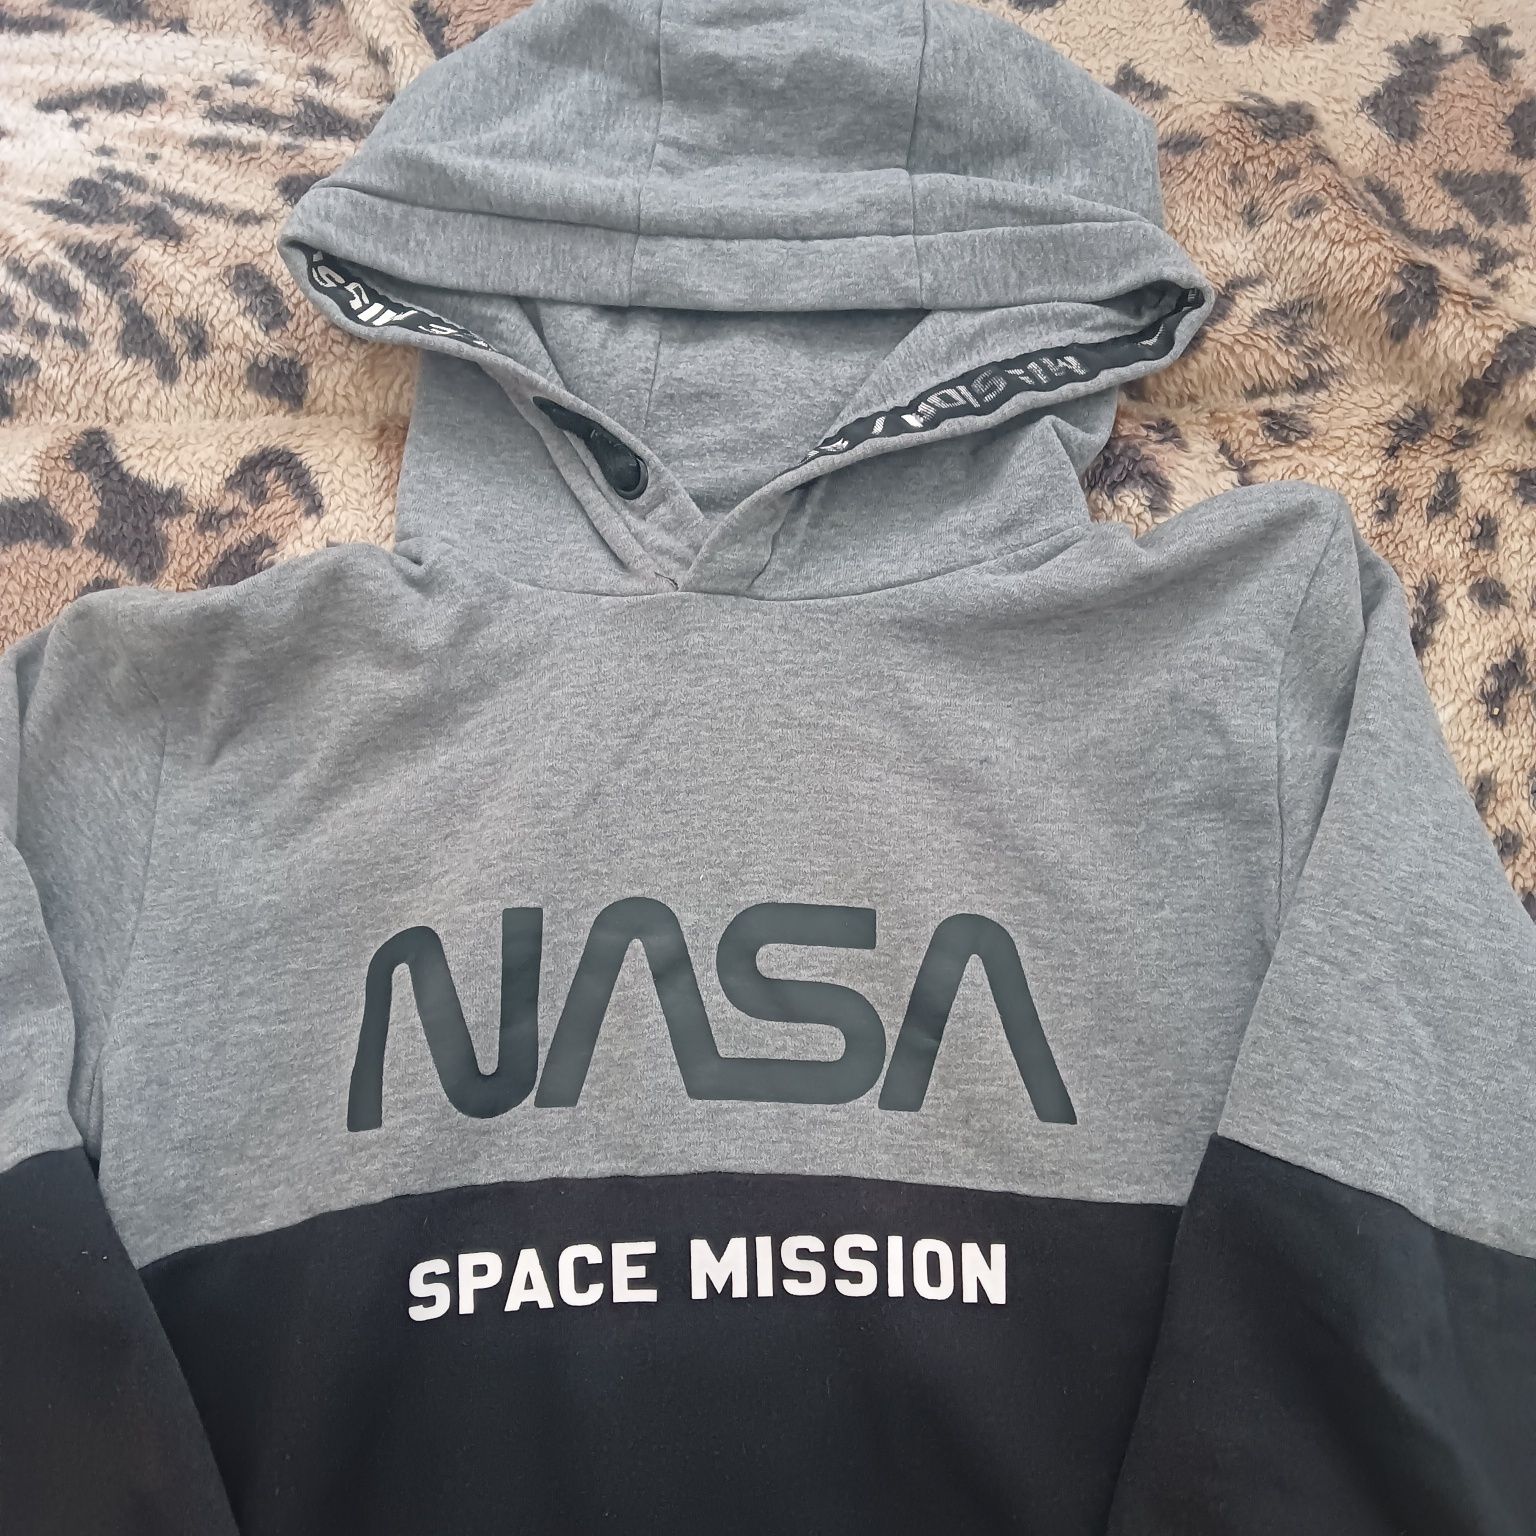 Bluza chłopięca NASA